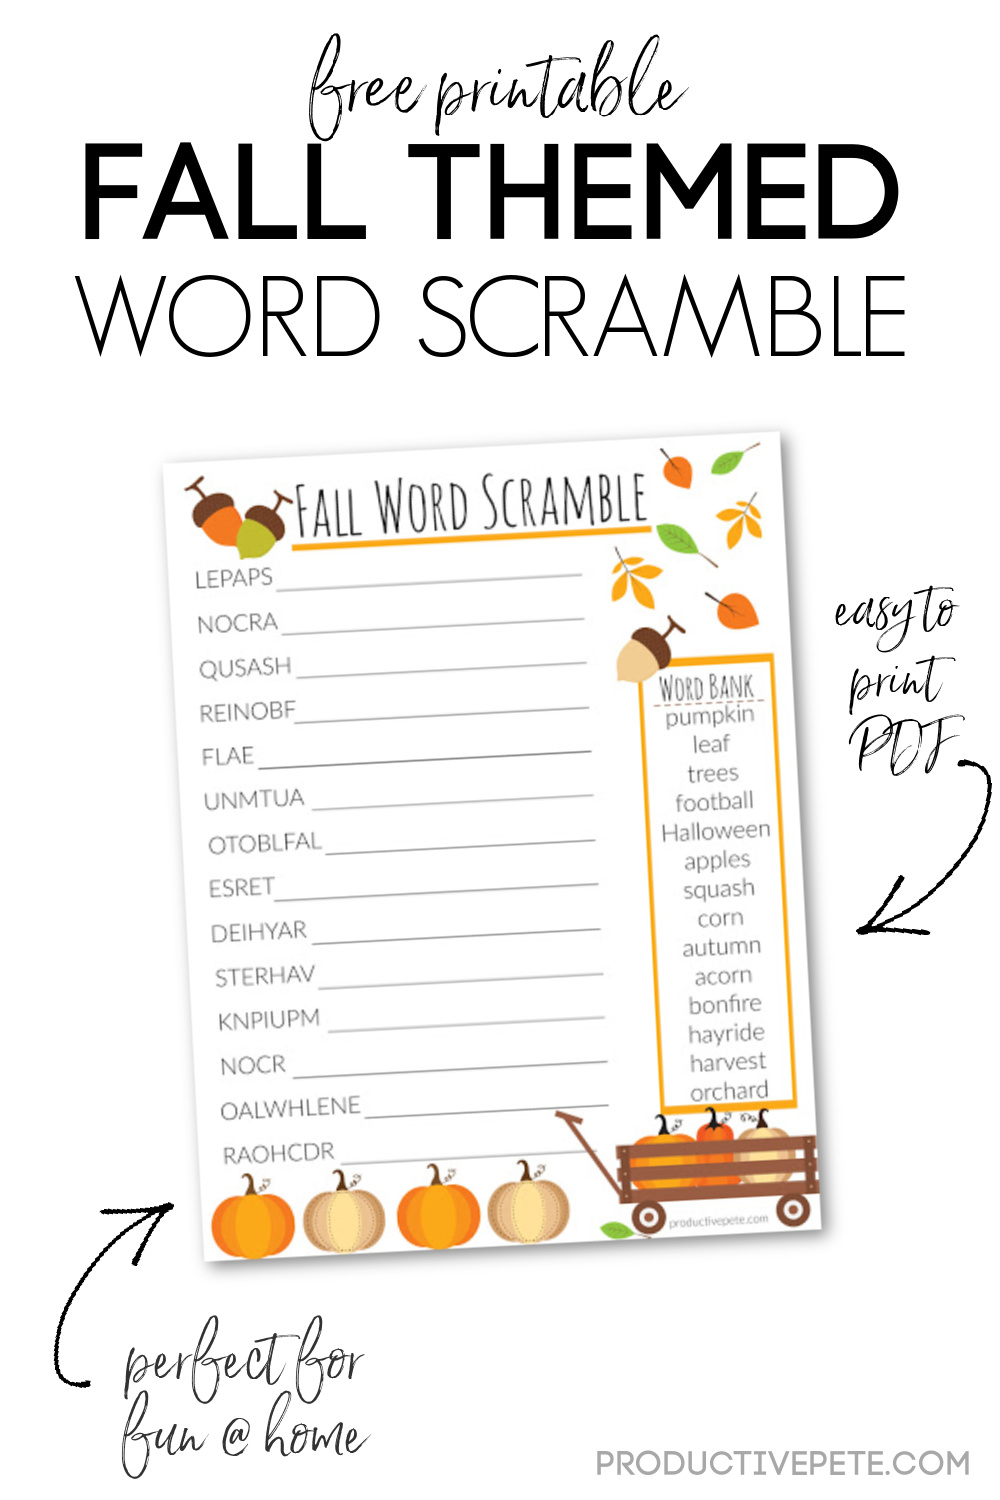 fall-word-scramble-for-kids-free-printable-worksheet-productive-pete